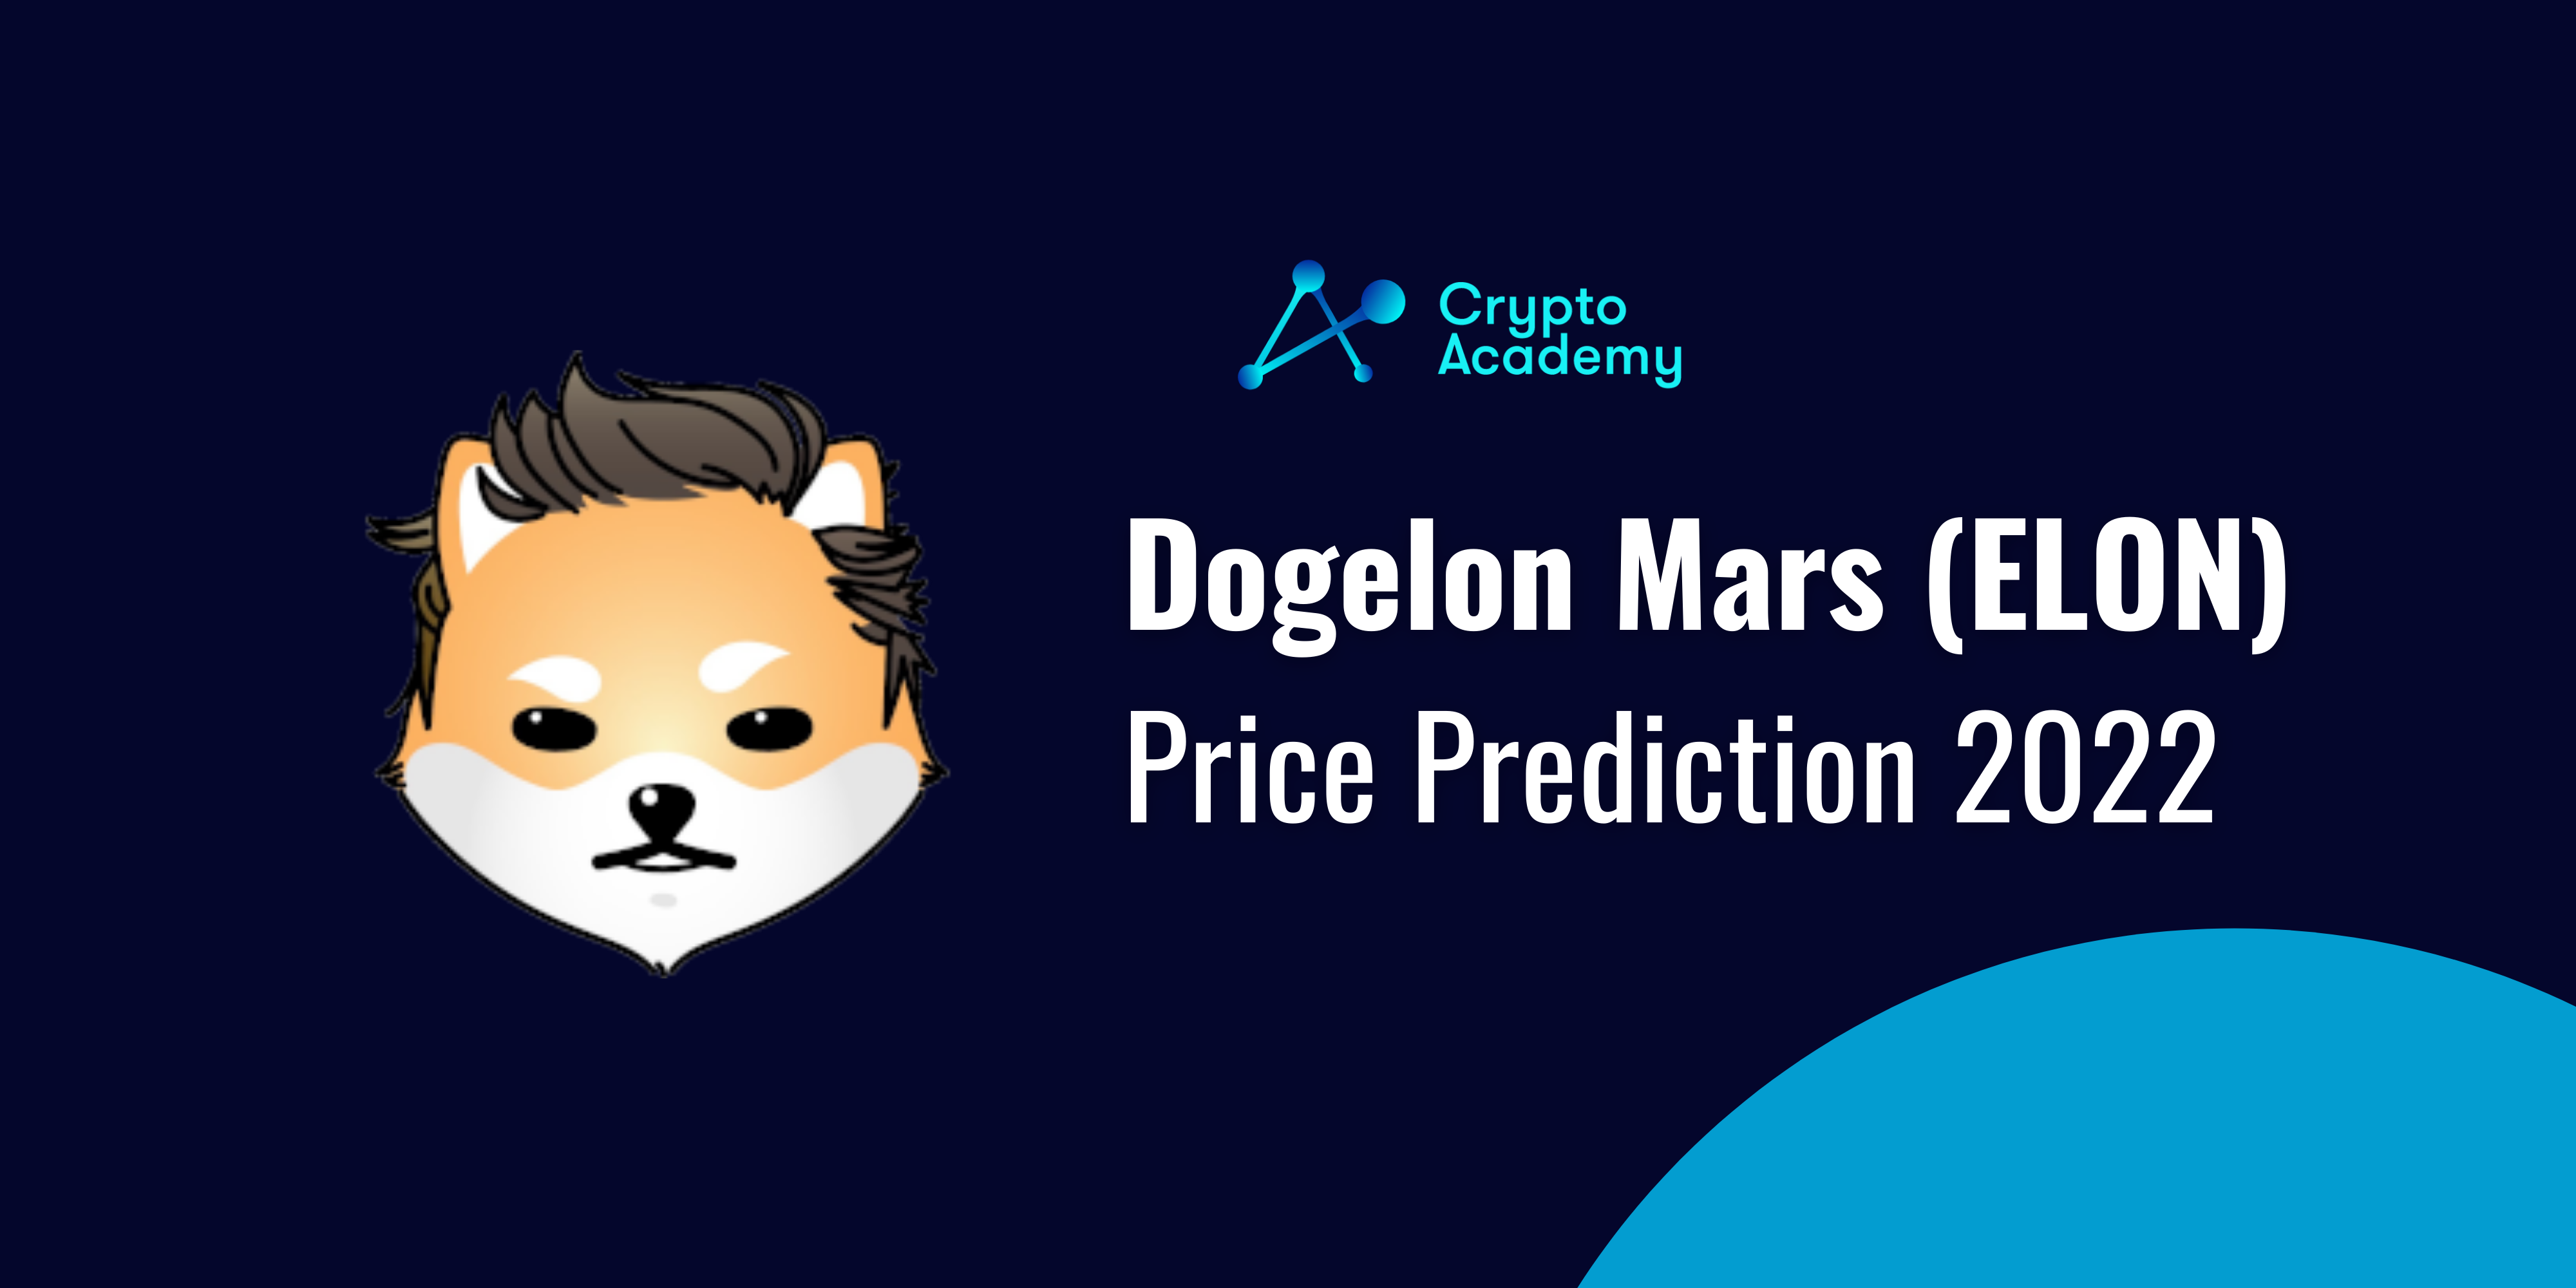 Dogelon Mars (ELON) Price Prediction 2022 and Beyond – Can ELON Eventually Hit $1?